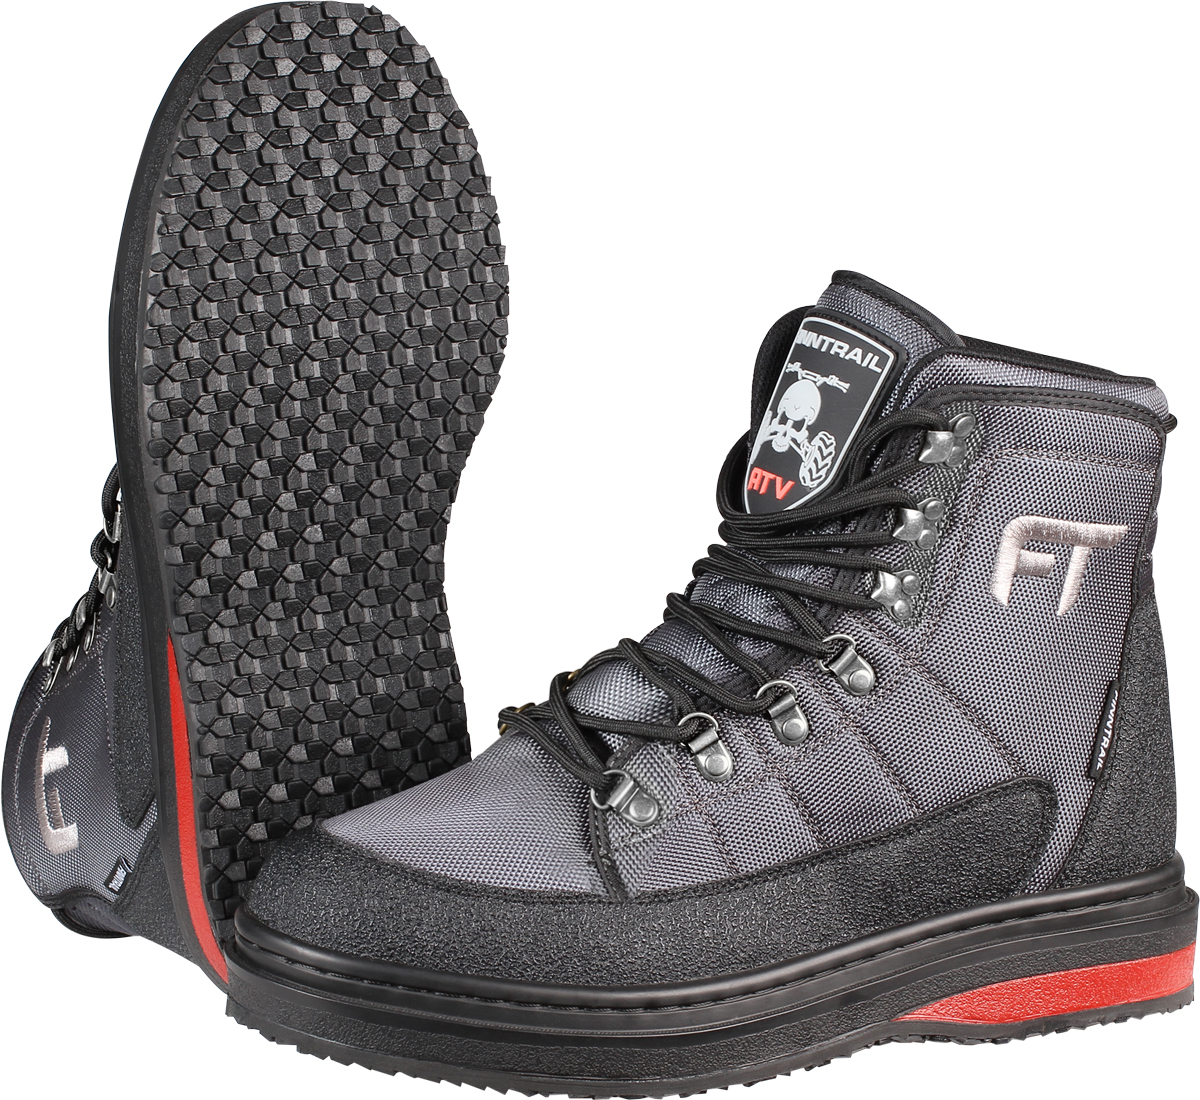 Ботинки для рыбалки Finntrail Runner, цвет: серый, черный, красный. 5221. Размер 43